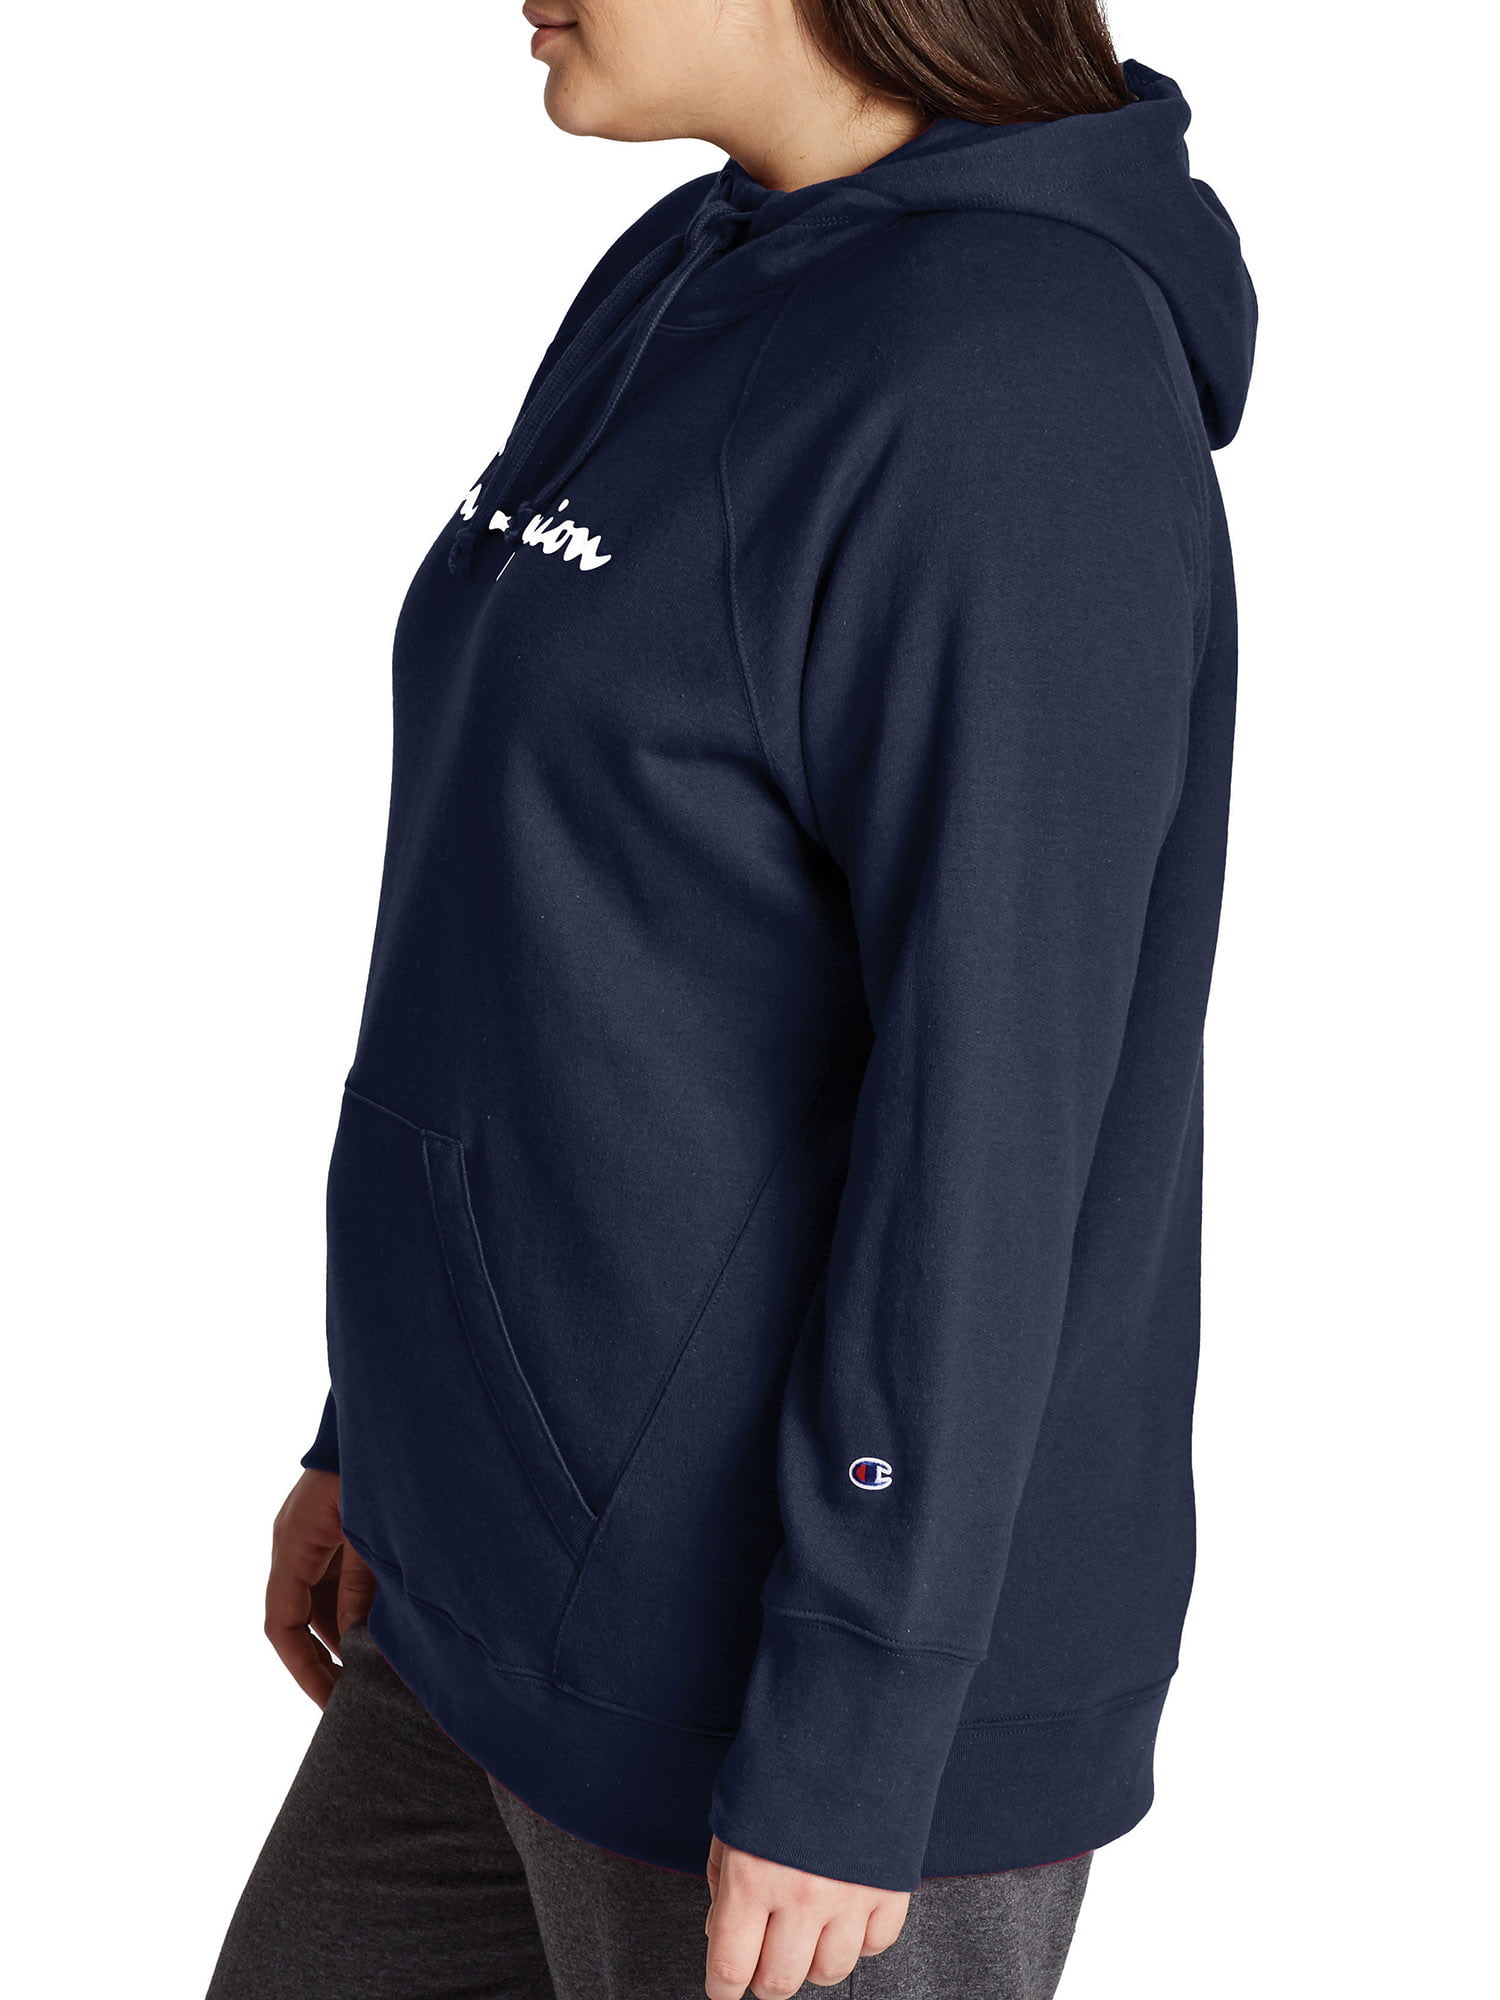 Champion NWT Logo Print Navy Blue Seamless Sweatshirt Bralette Size L - $28  - From Linda